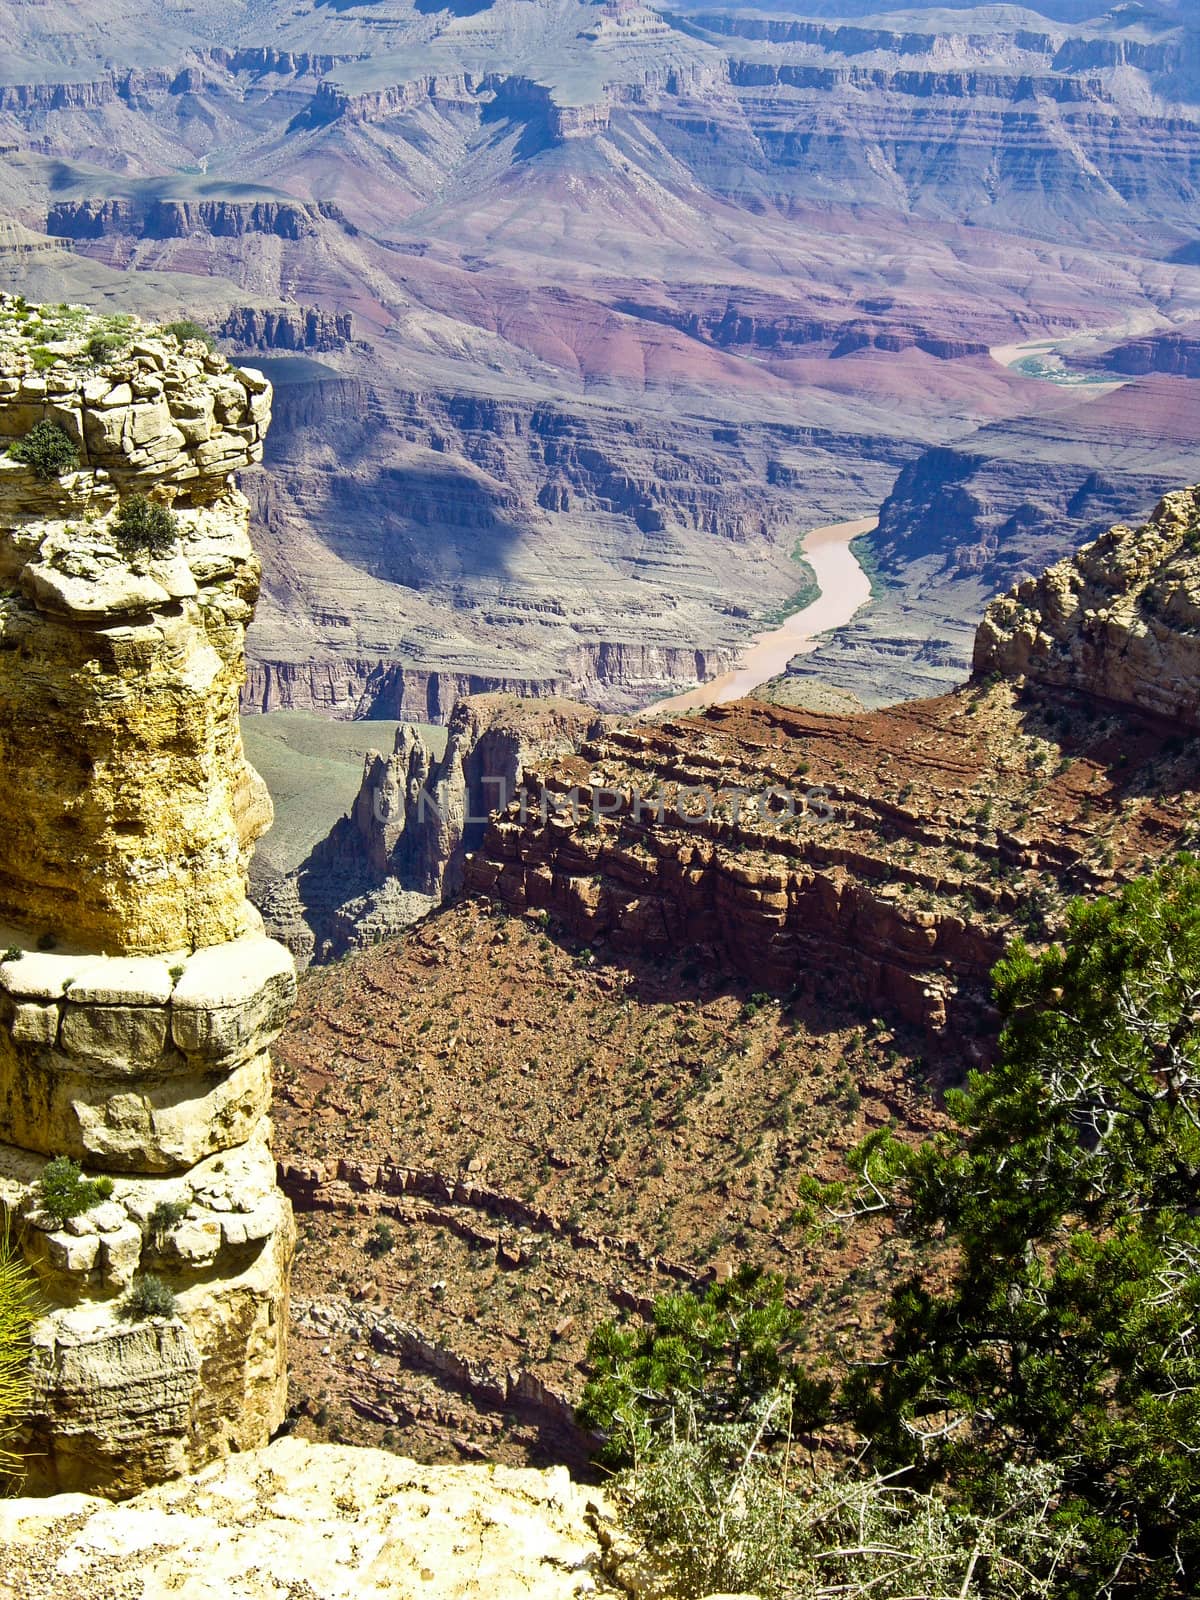 Colorado River at Grand Canyon by emattil